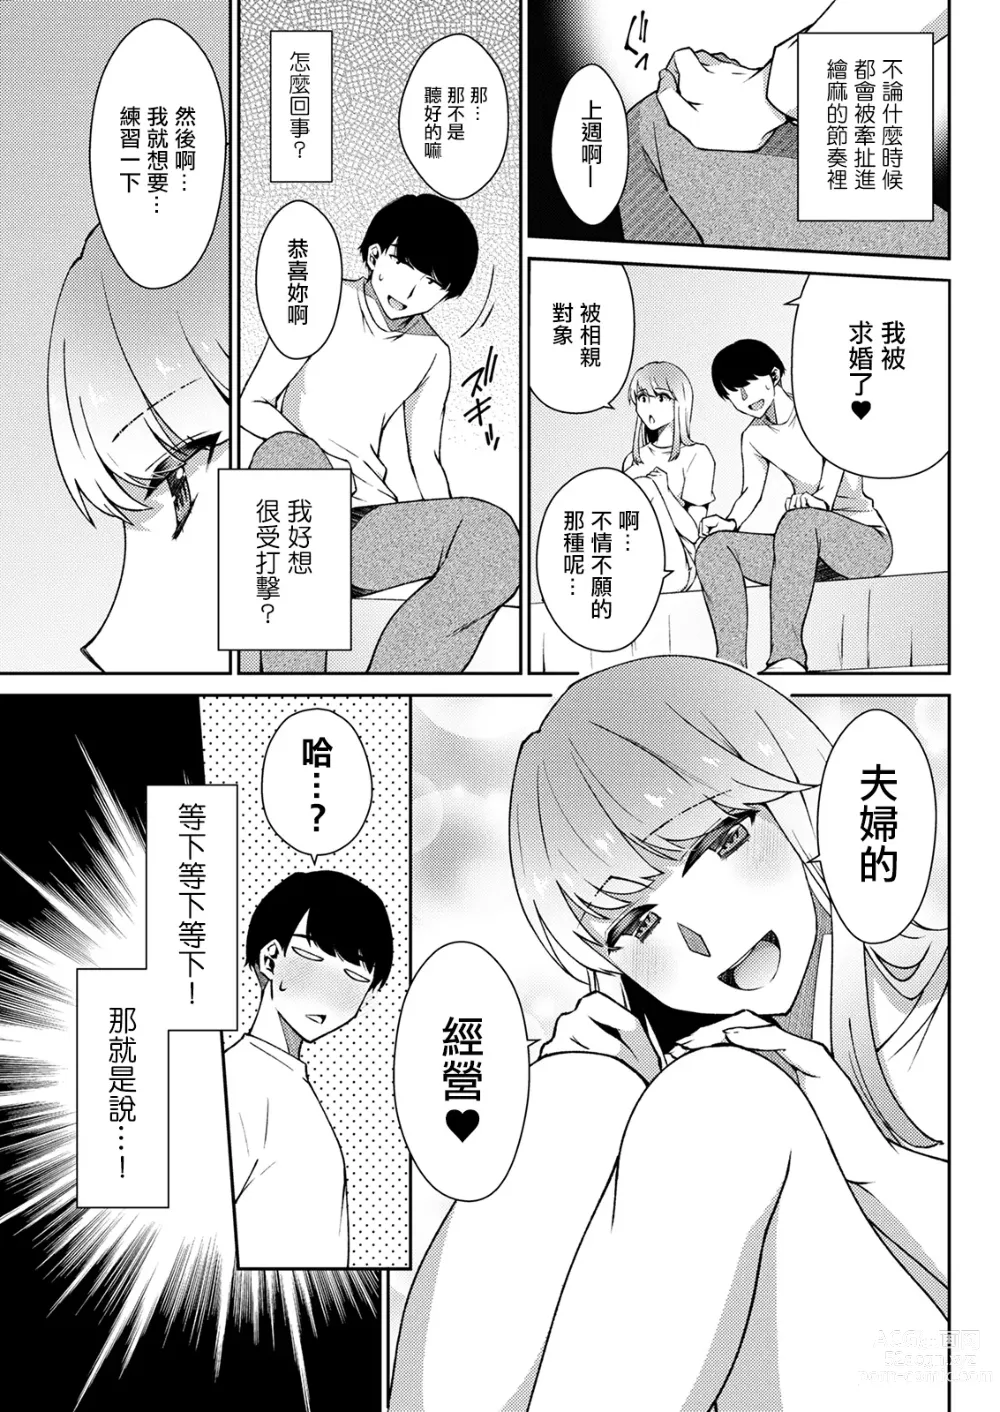 Page 5 of manga Koi no Wazurai